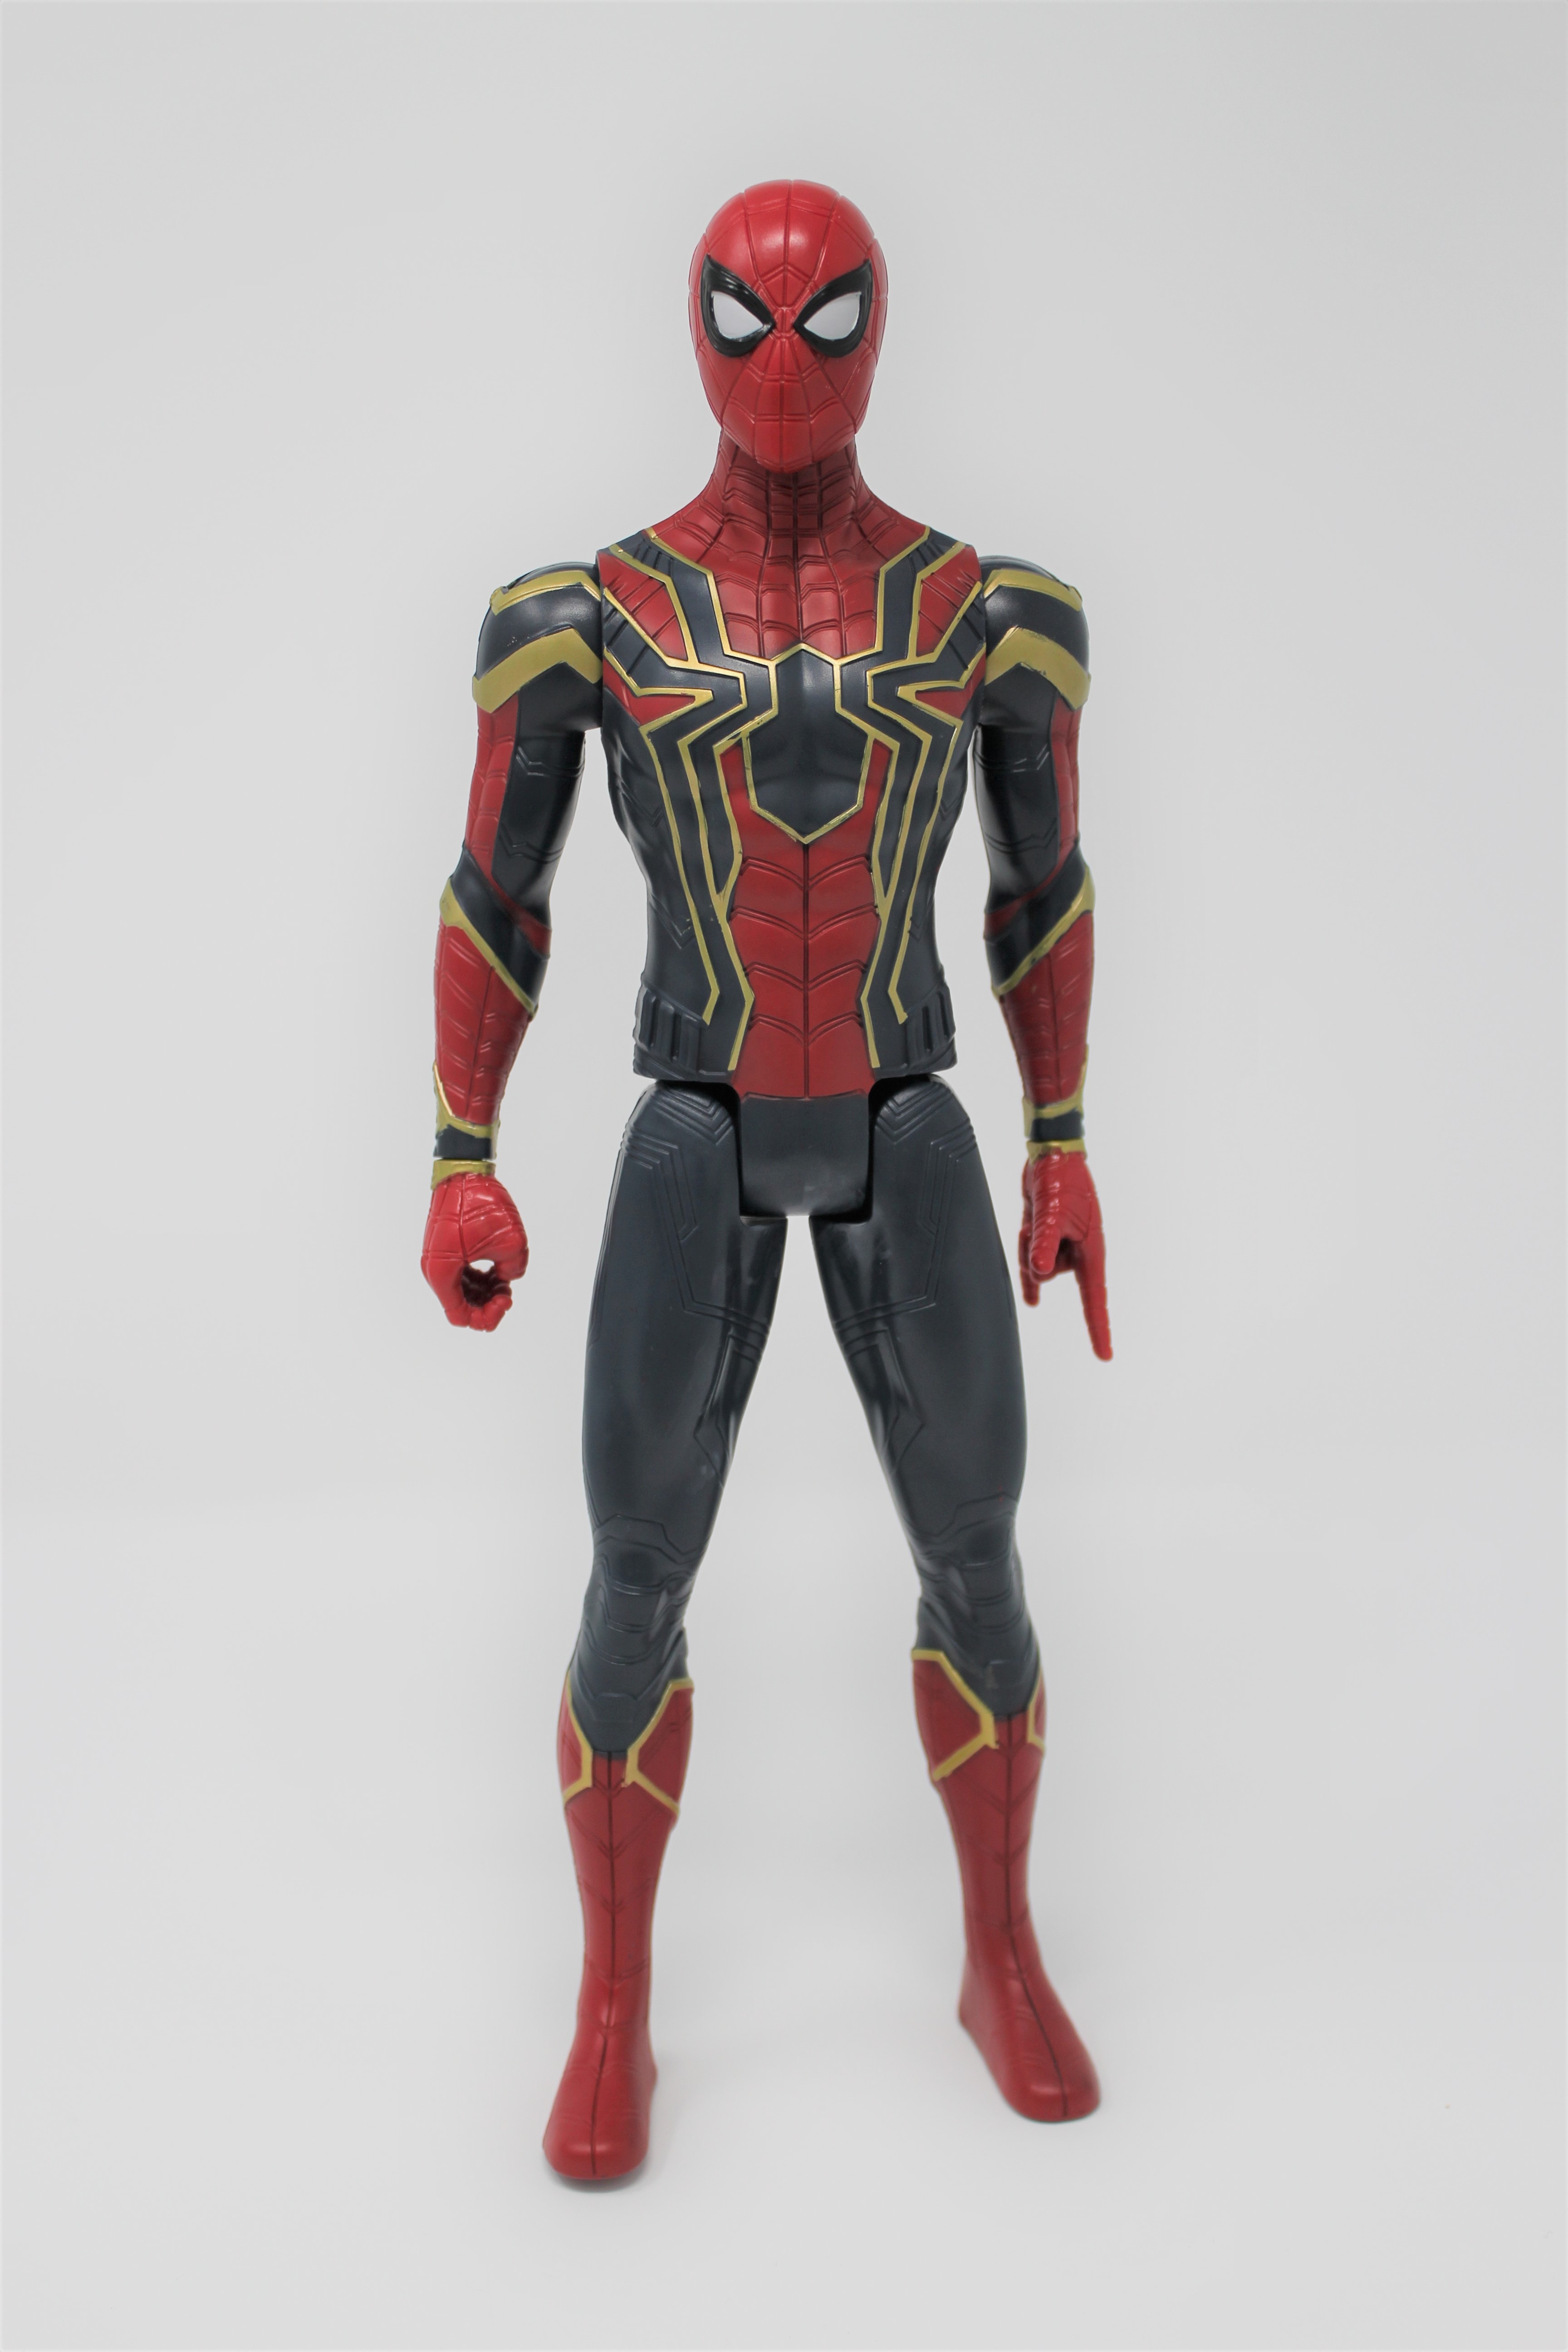 Marvel's SpiderMan